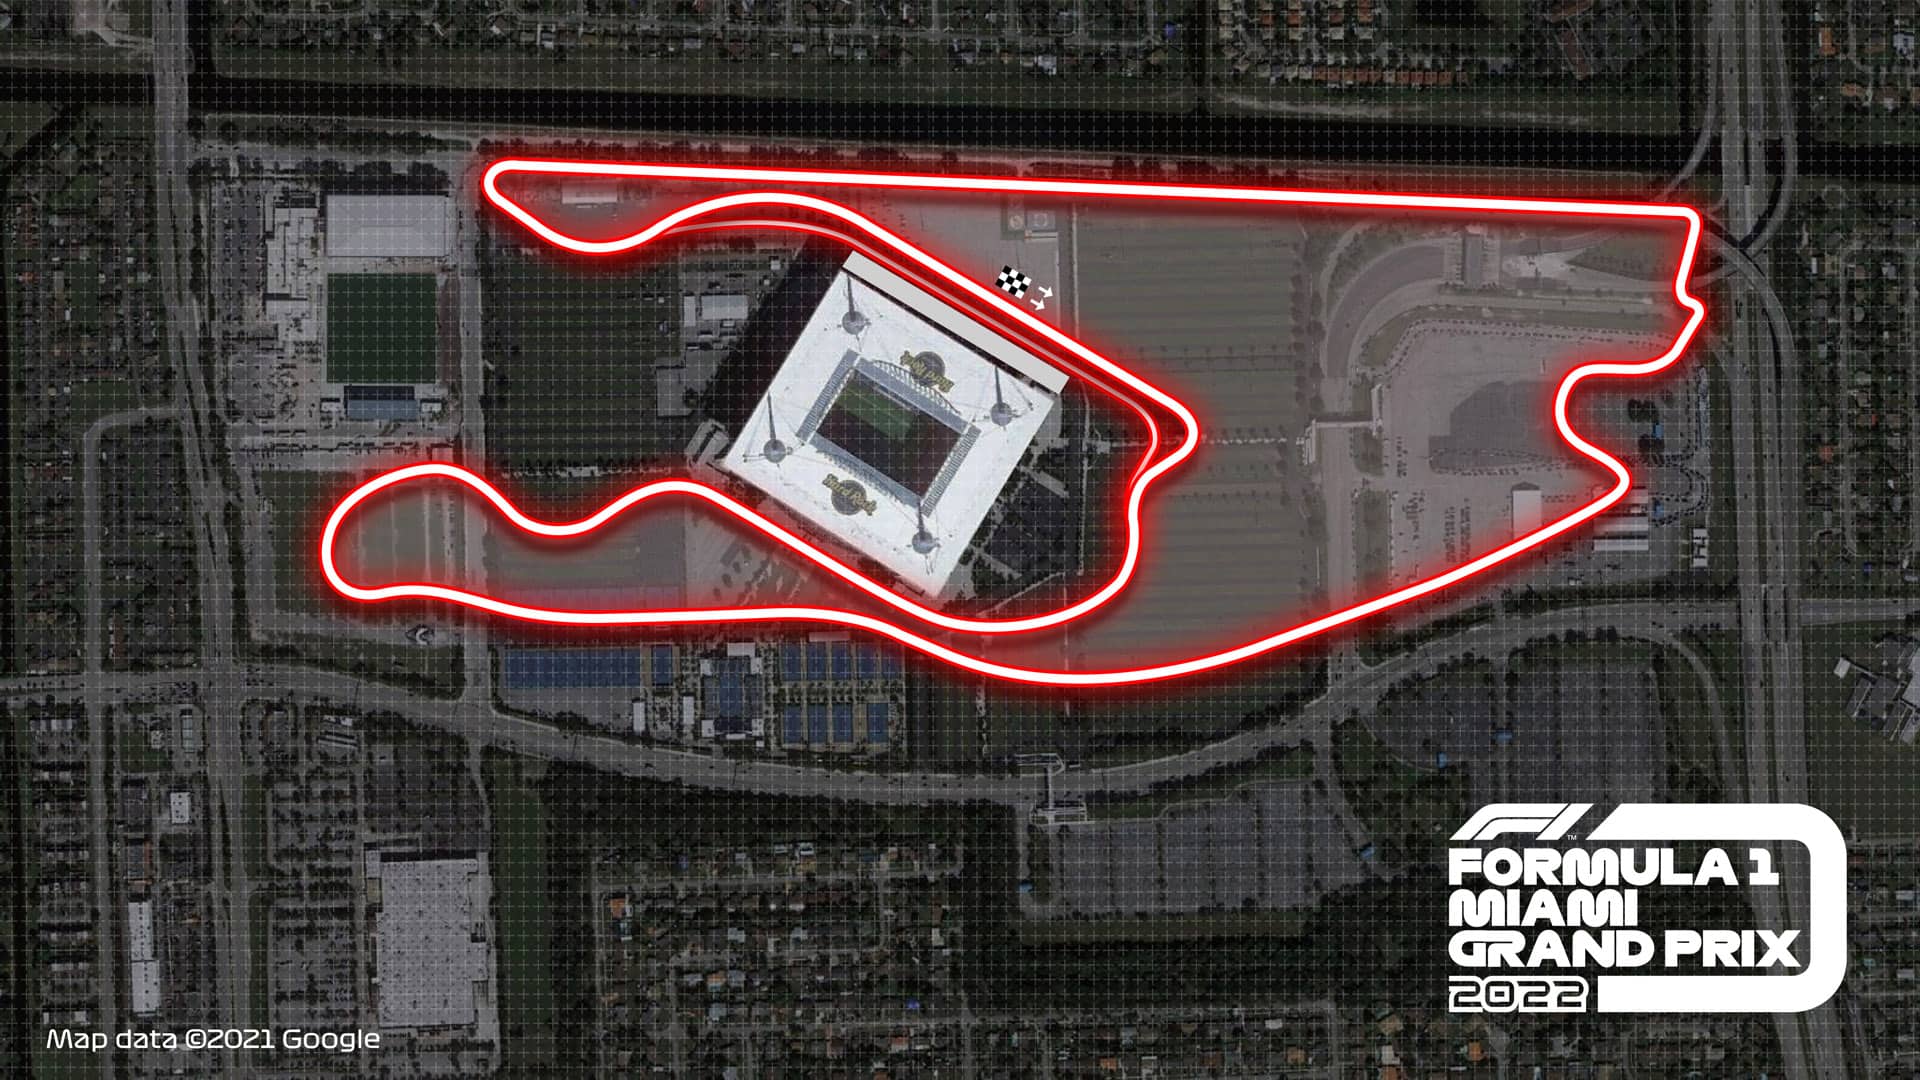 Miami prepares for its first Formula 1 Grand Prix